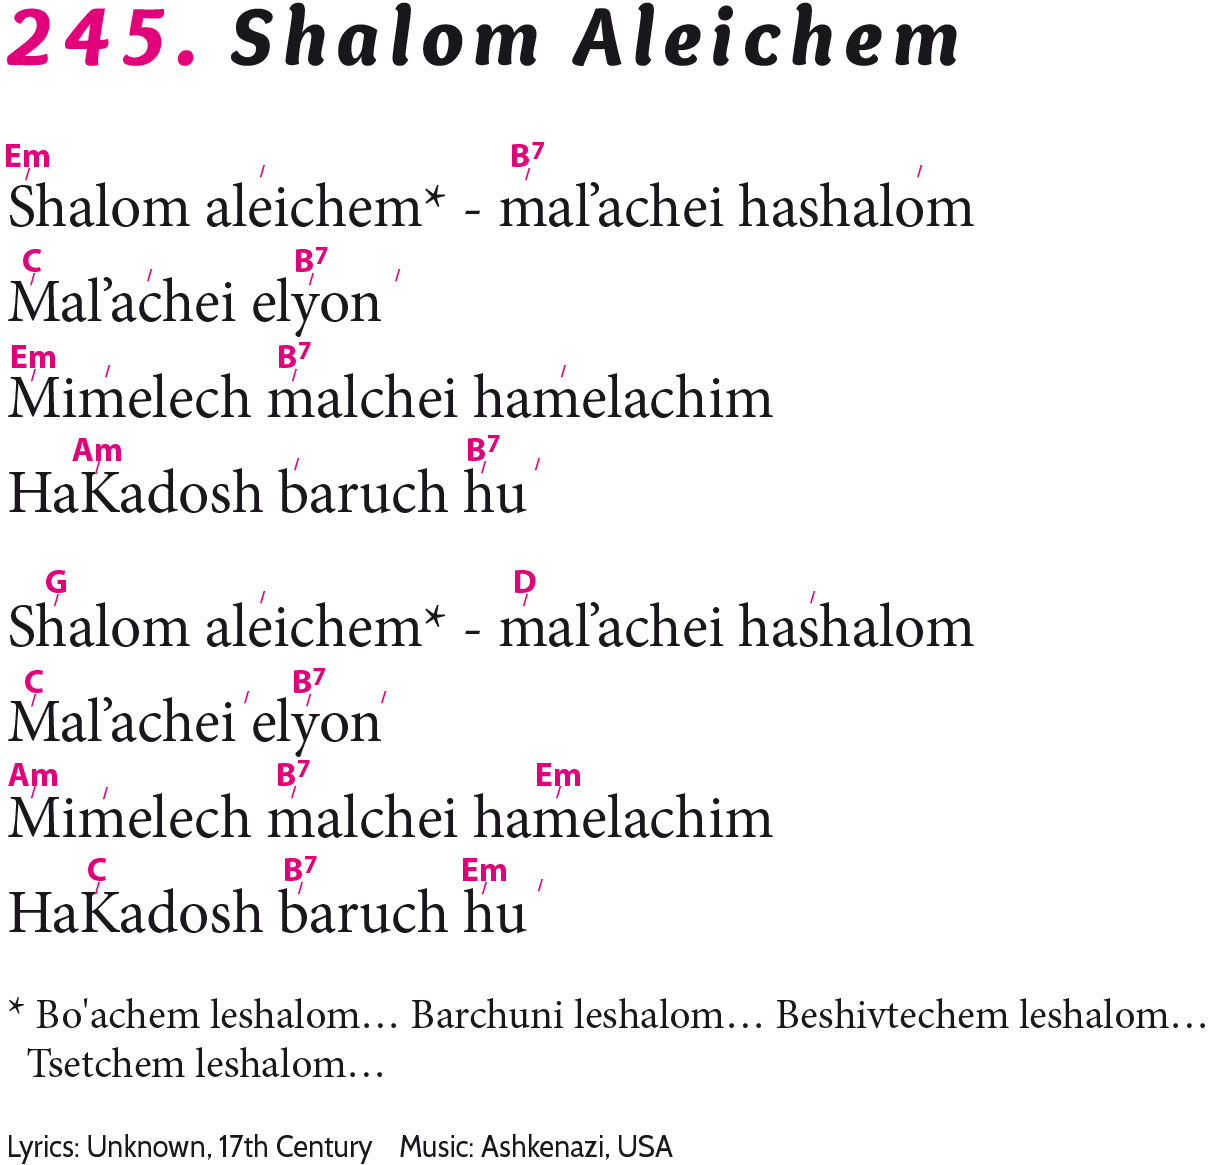 Hevenu Shalom Aleichem lyrics video - BimBam